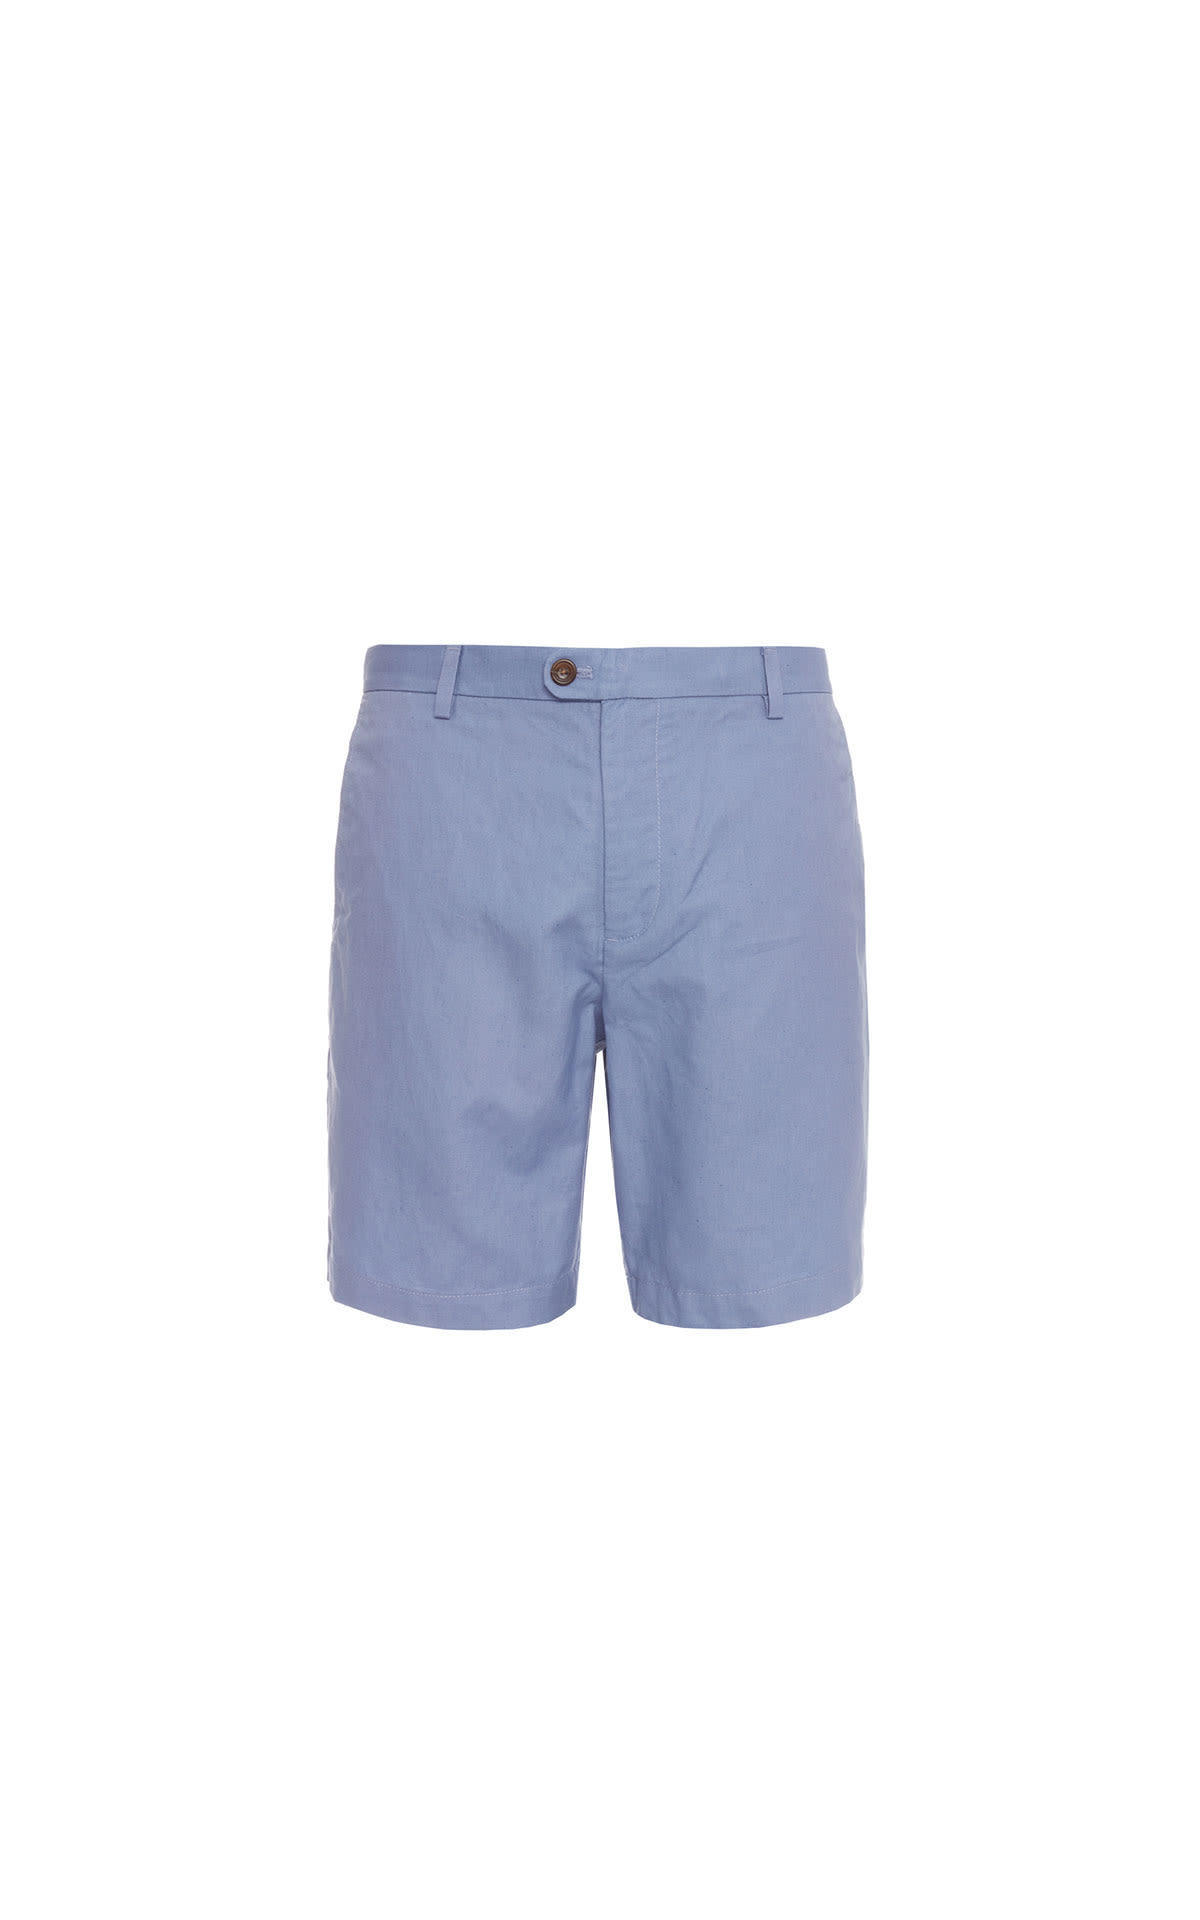 Charles Trywhitt Linen cotton blend shorts from Bicester Village